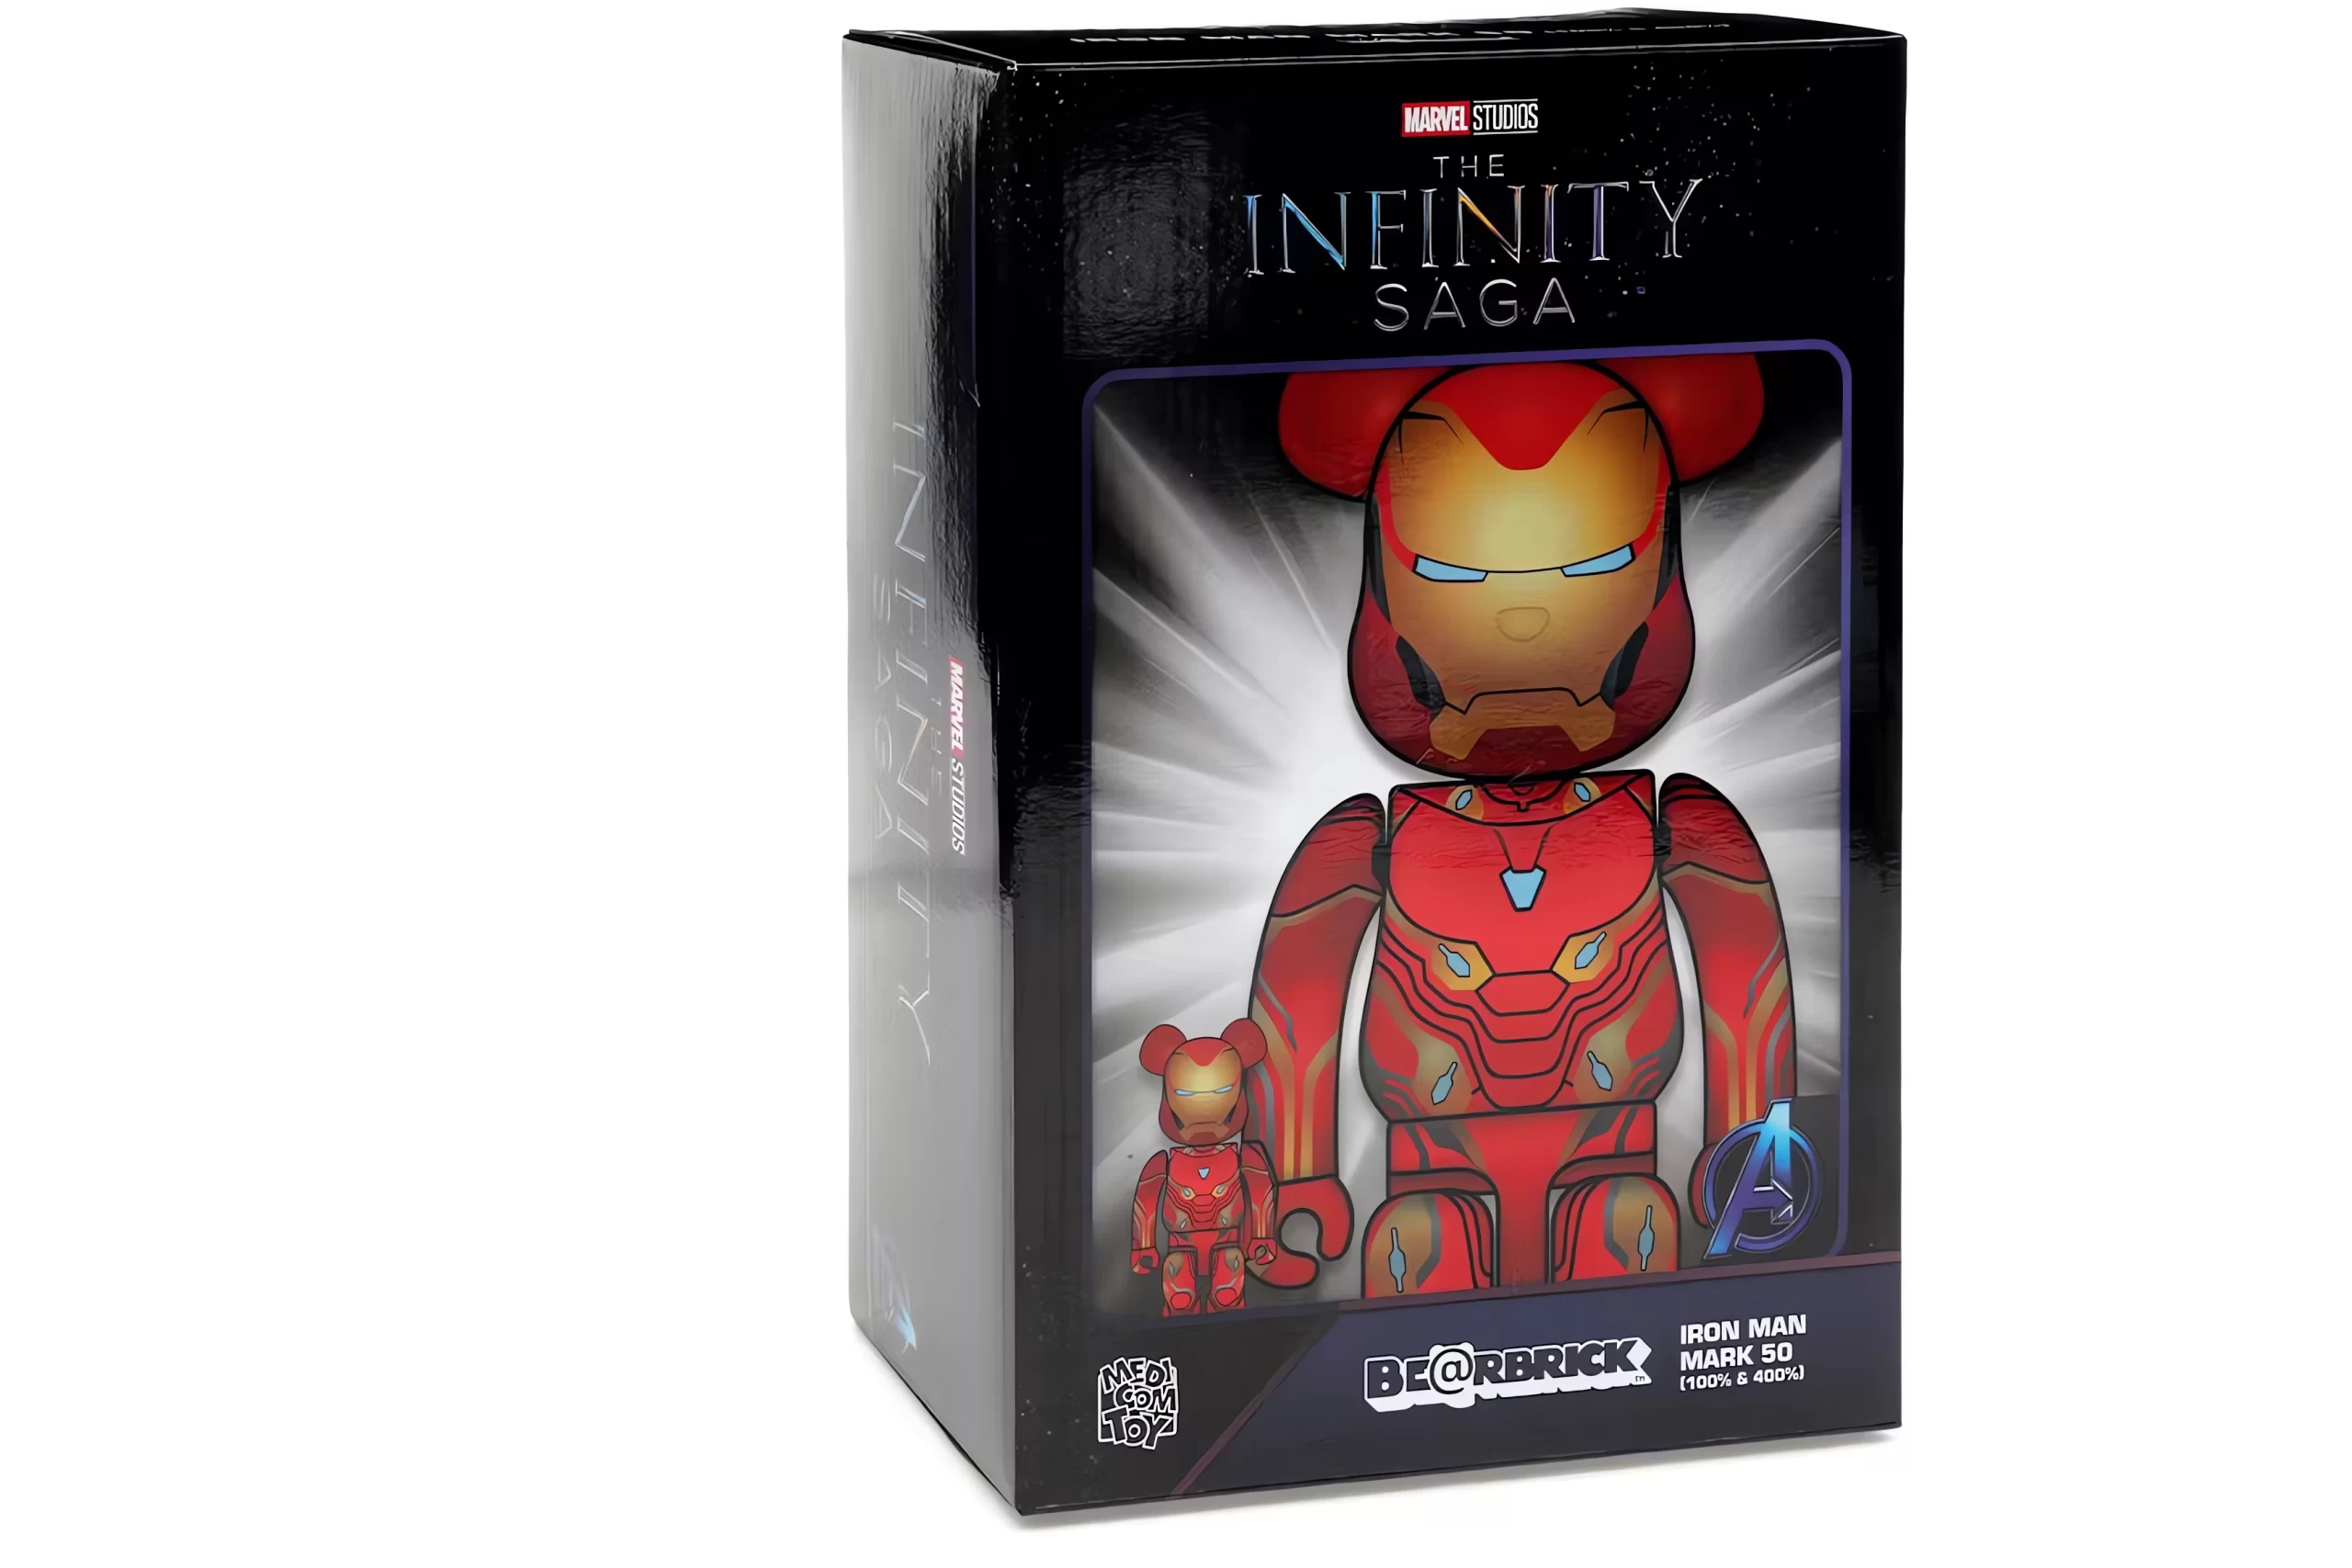 Bearbrick x Marvel Iron Man Mark 50 400% Toy